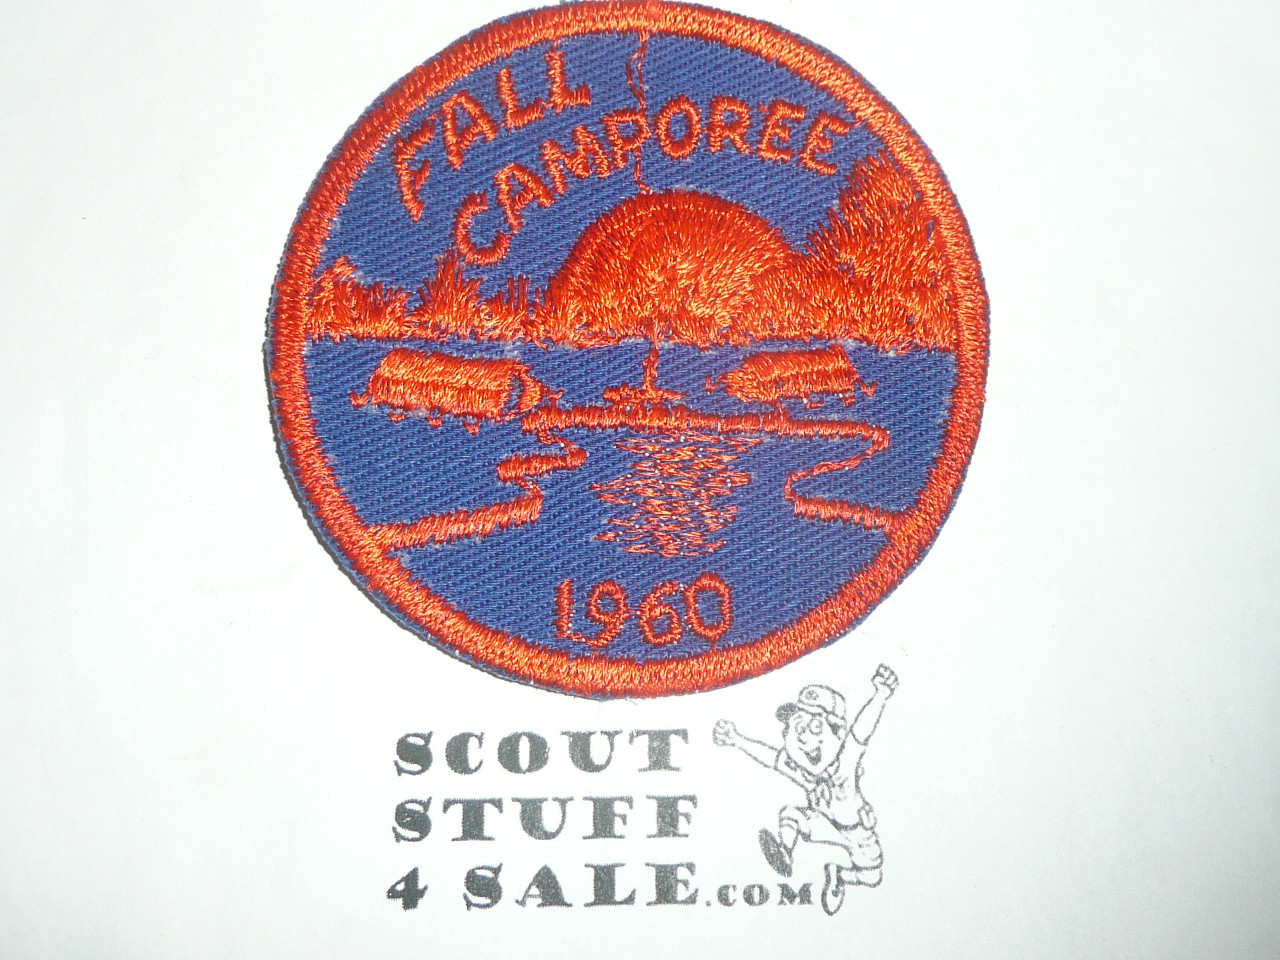 1960 Fall Camporee Patch, Generic BSA issue, navy twill, orange c/e bdr